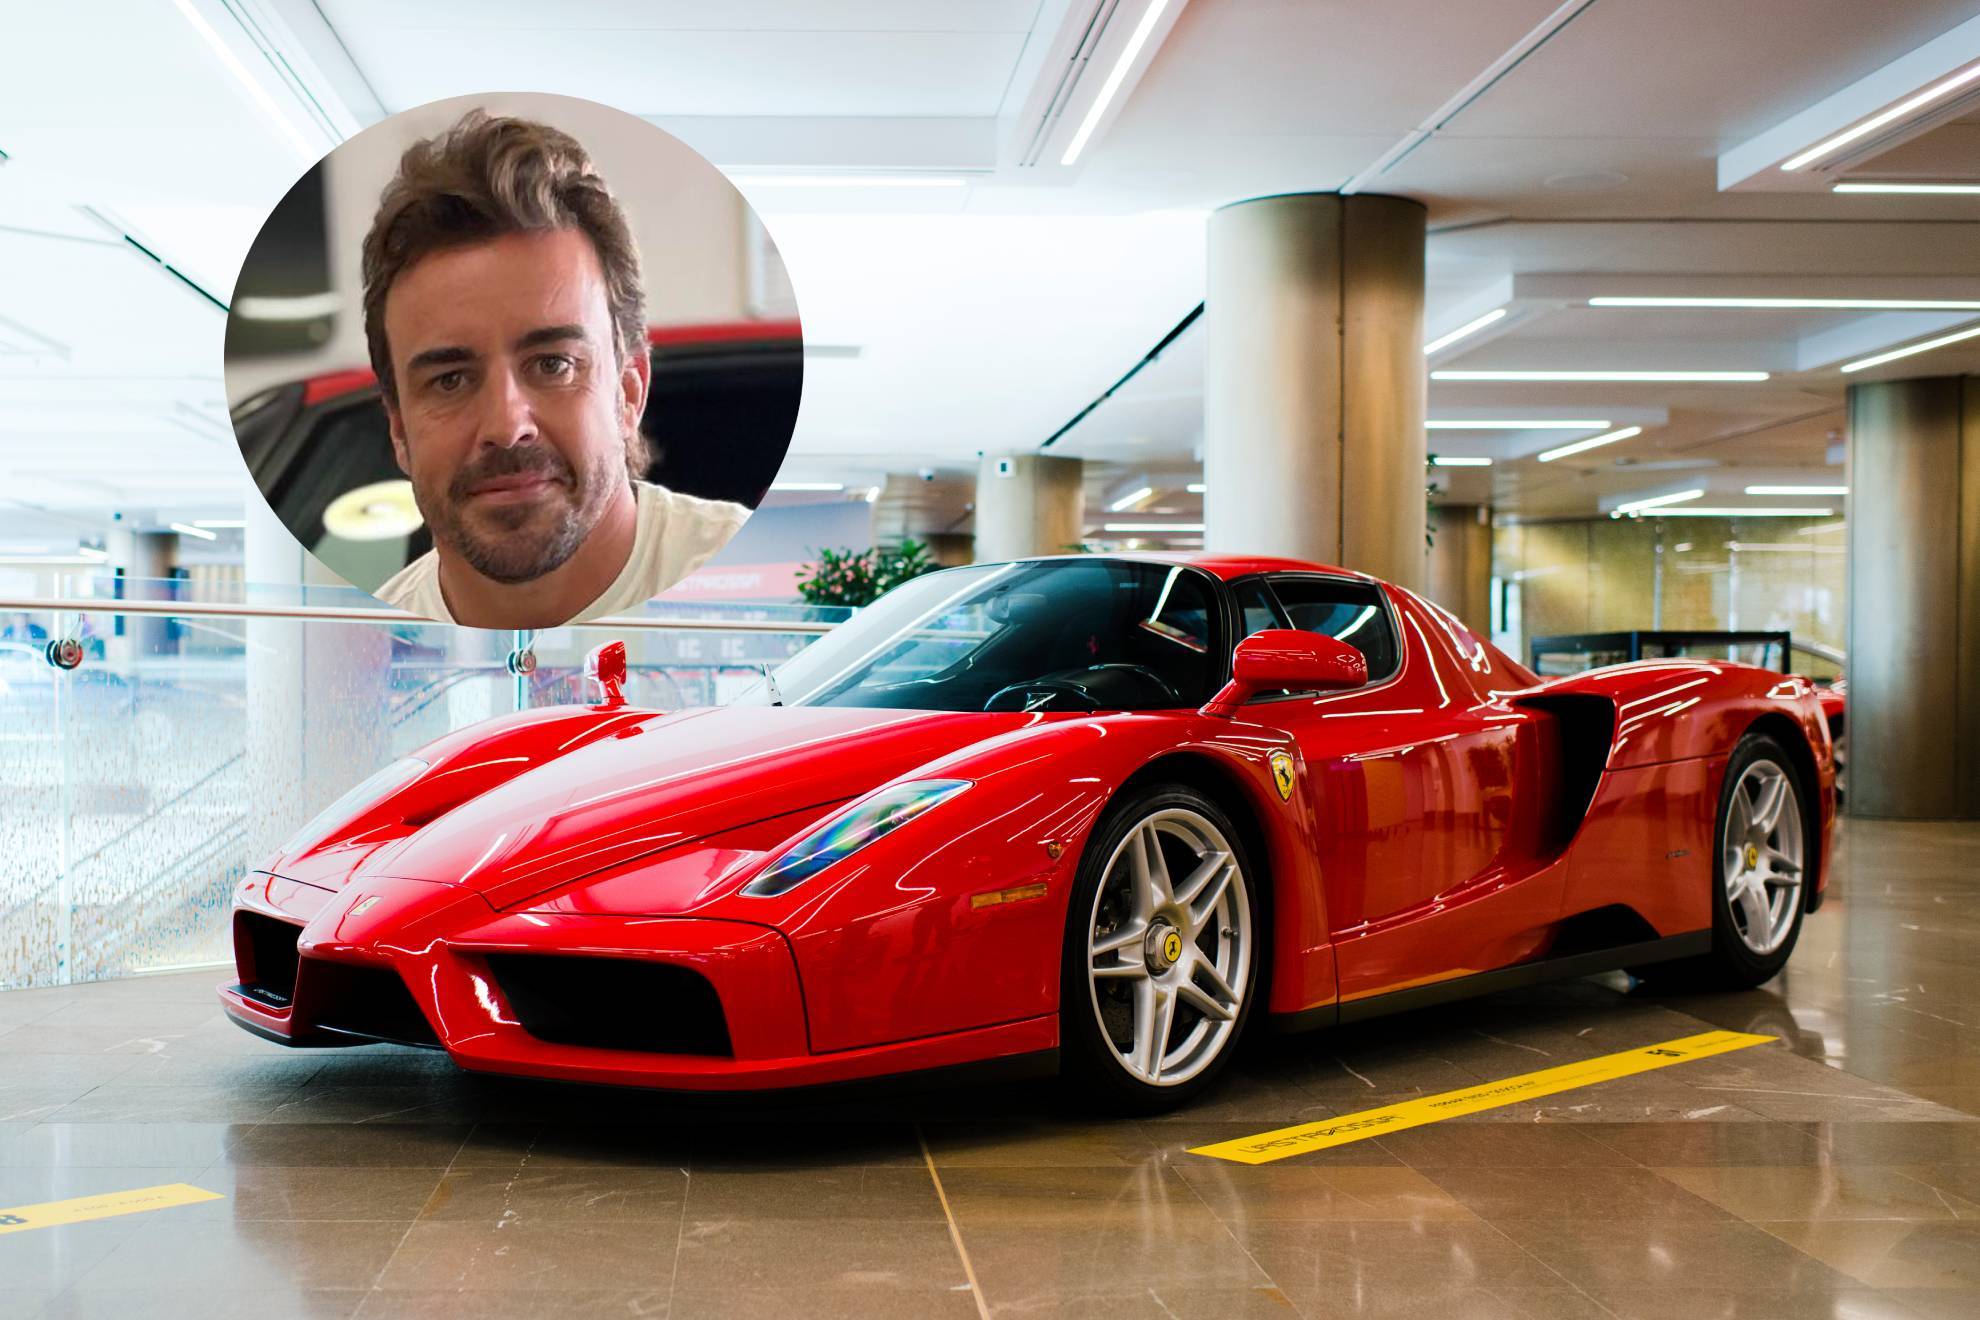 Fernando Alonso - Ferrari Enzo - 5,4 millones - Monaco Car Auctions - subasta